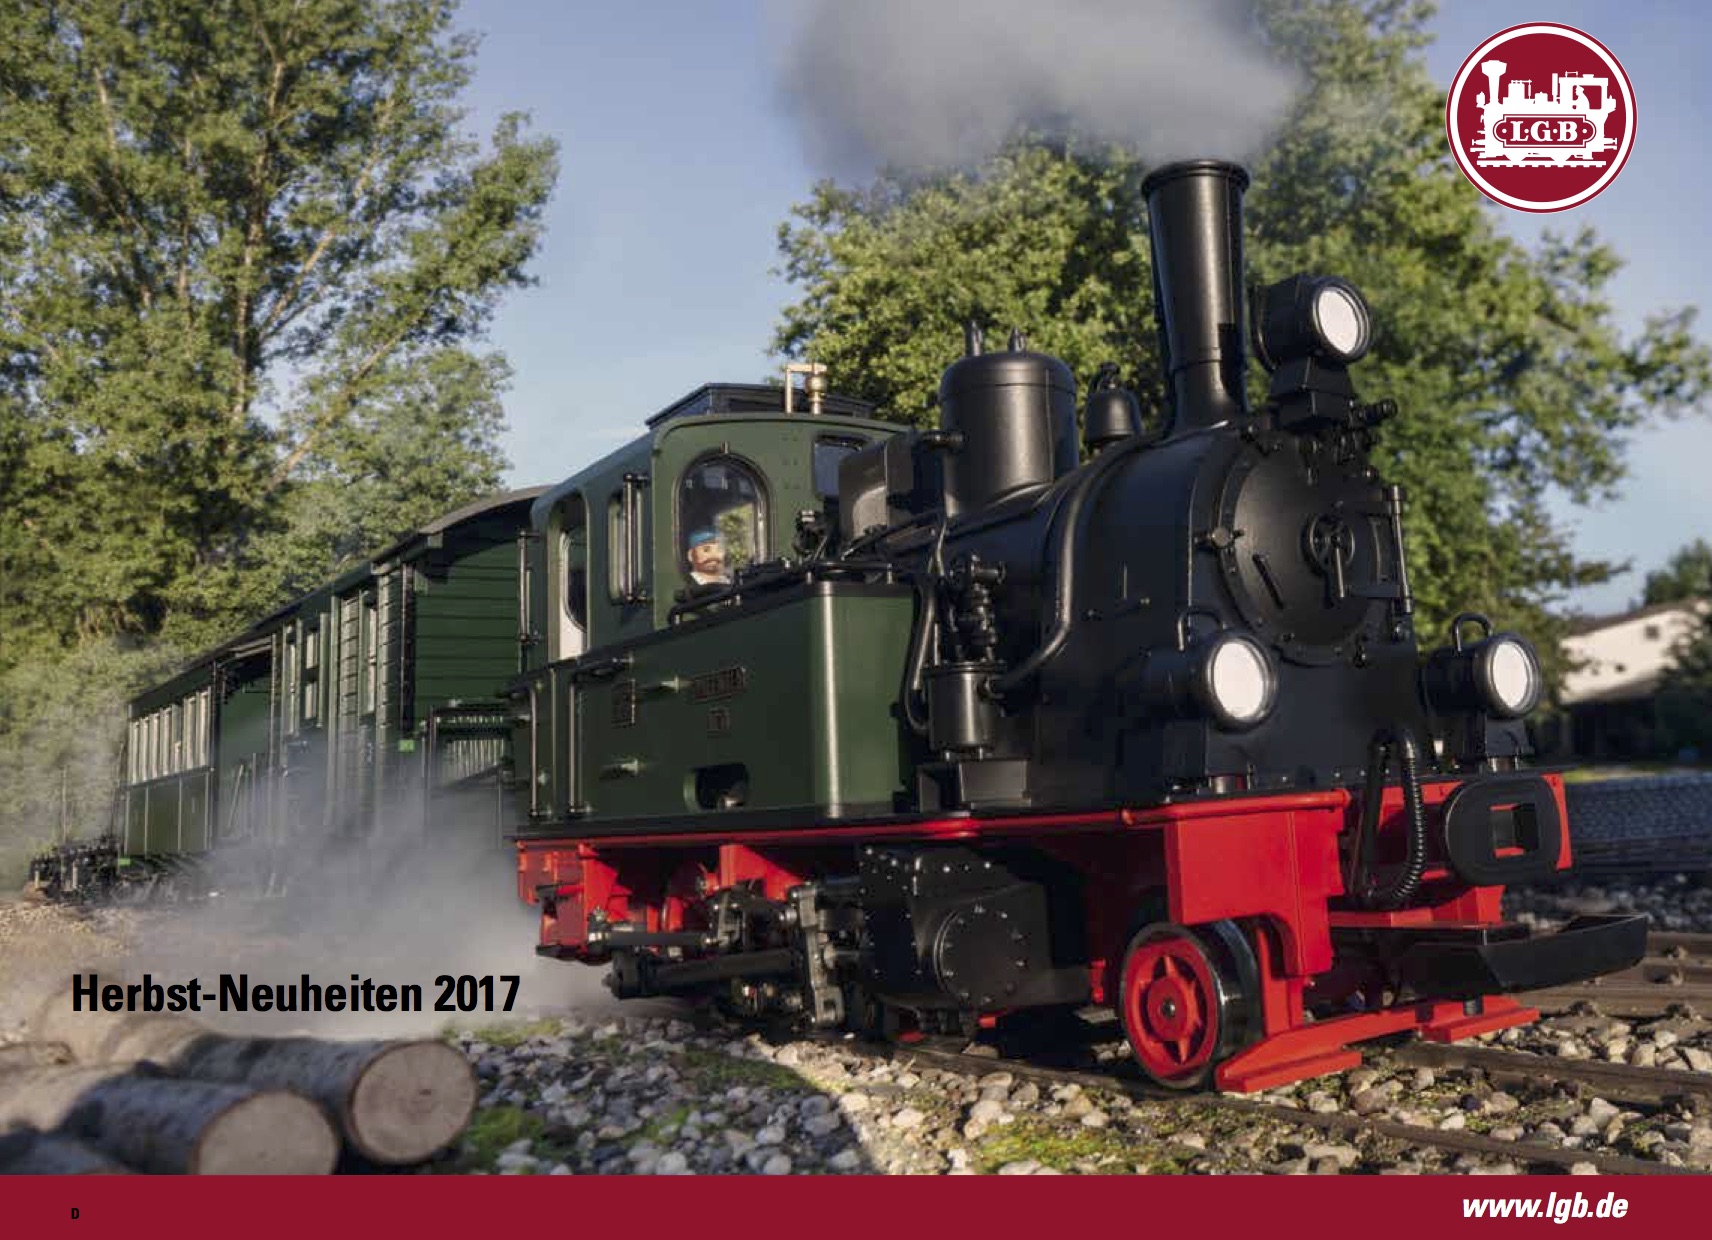 LGB Neuheiten (New Items) 2017 - Herbst/Fall; Deutsch/German